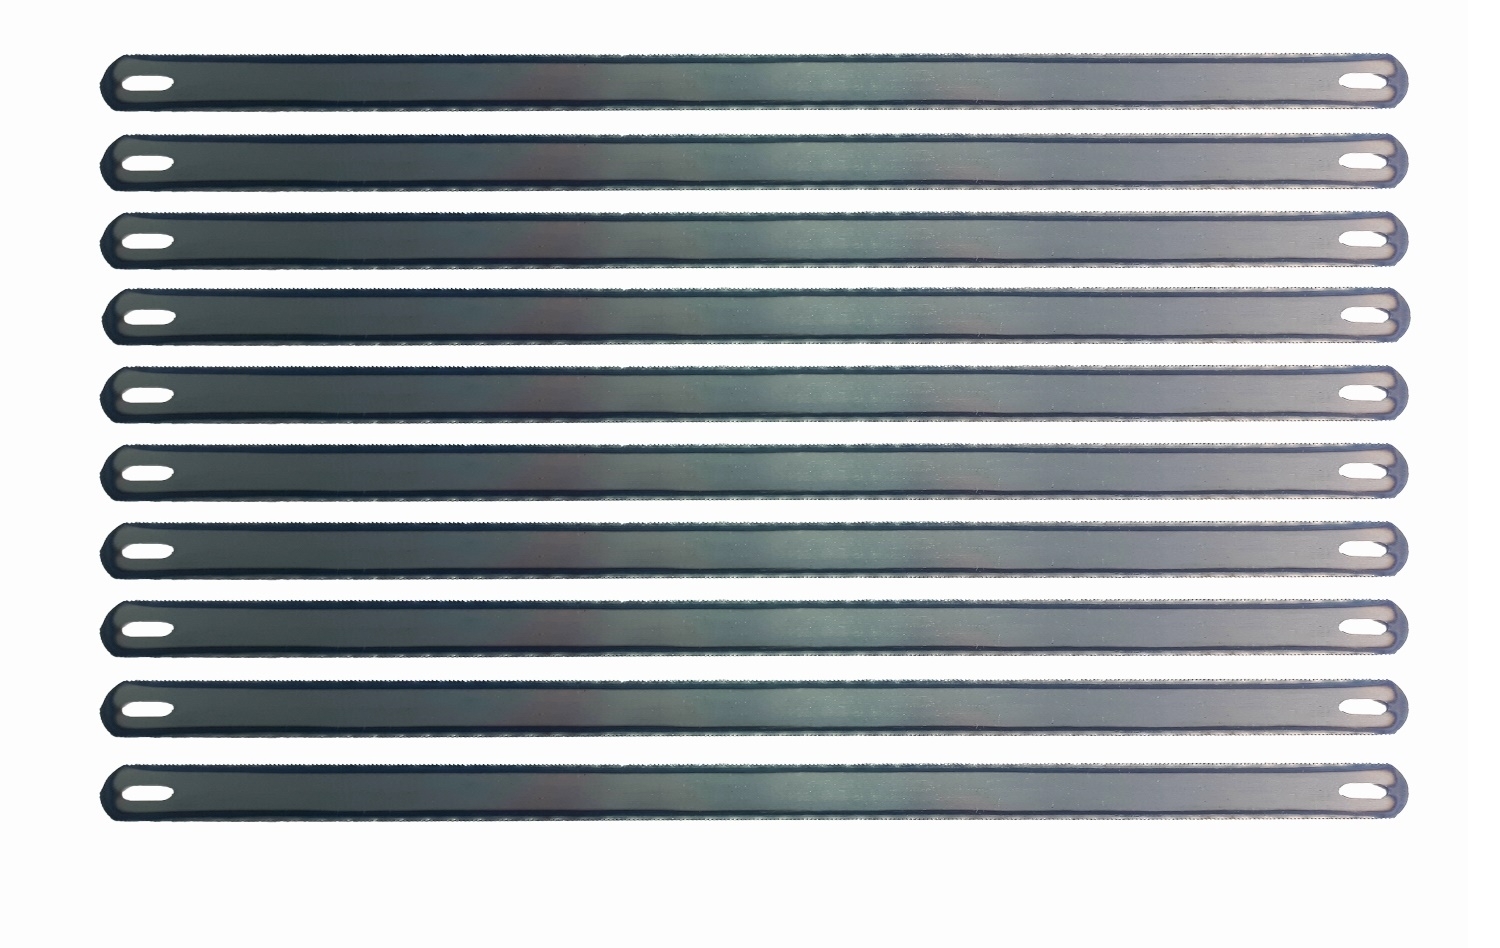 10x Ersatz-Sägeblätter doppelseitig für Metall Handsäge Metallsäge Eisensäge